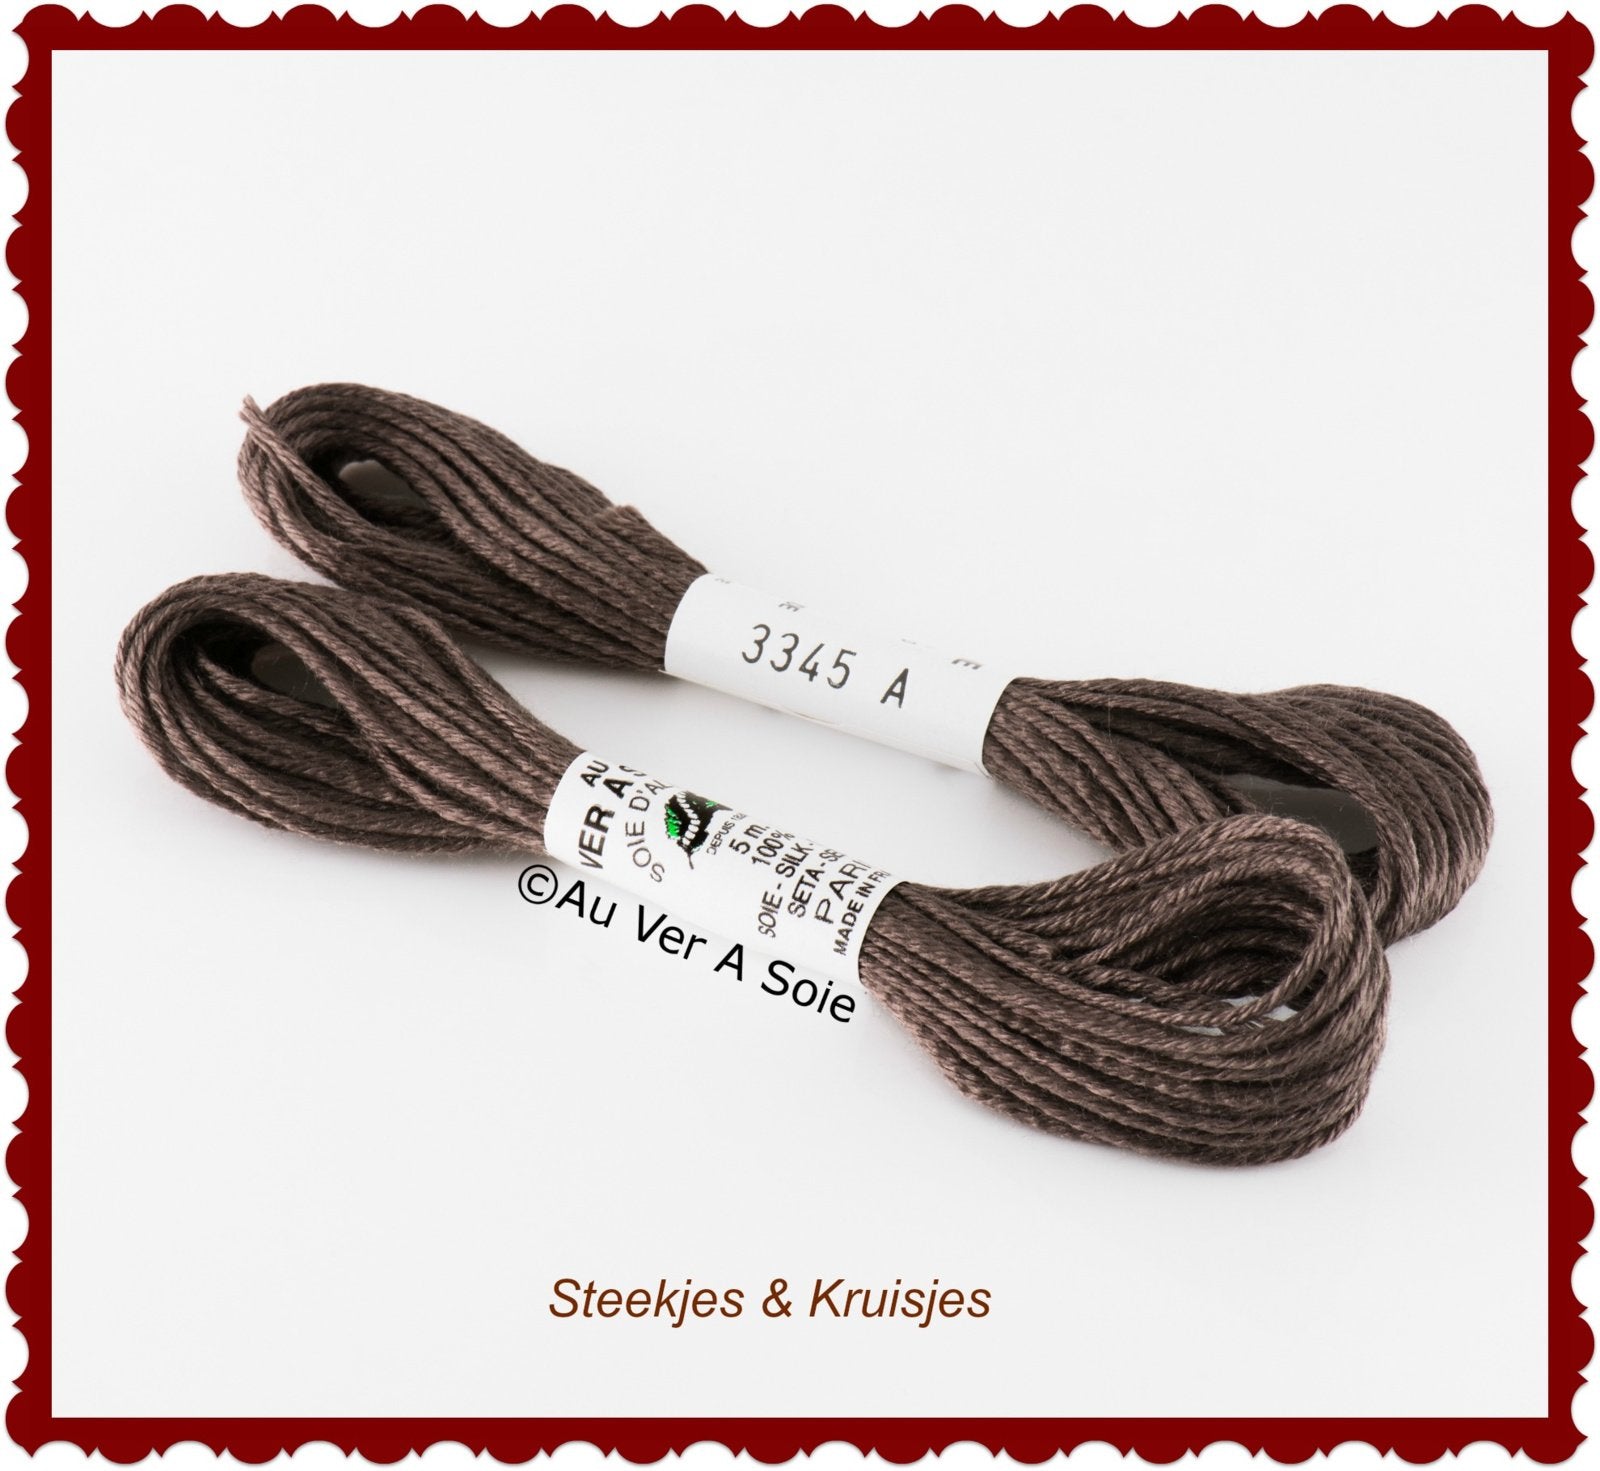 Au ver ie "soie d'alger" silk yarn color no. 3345